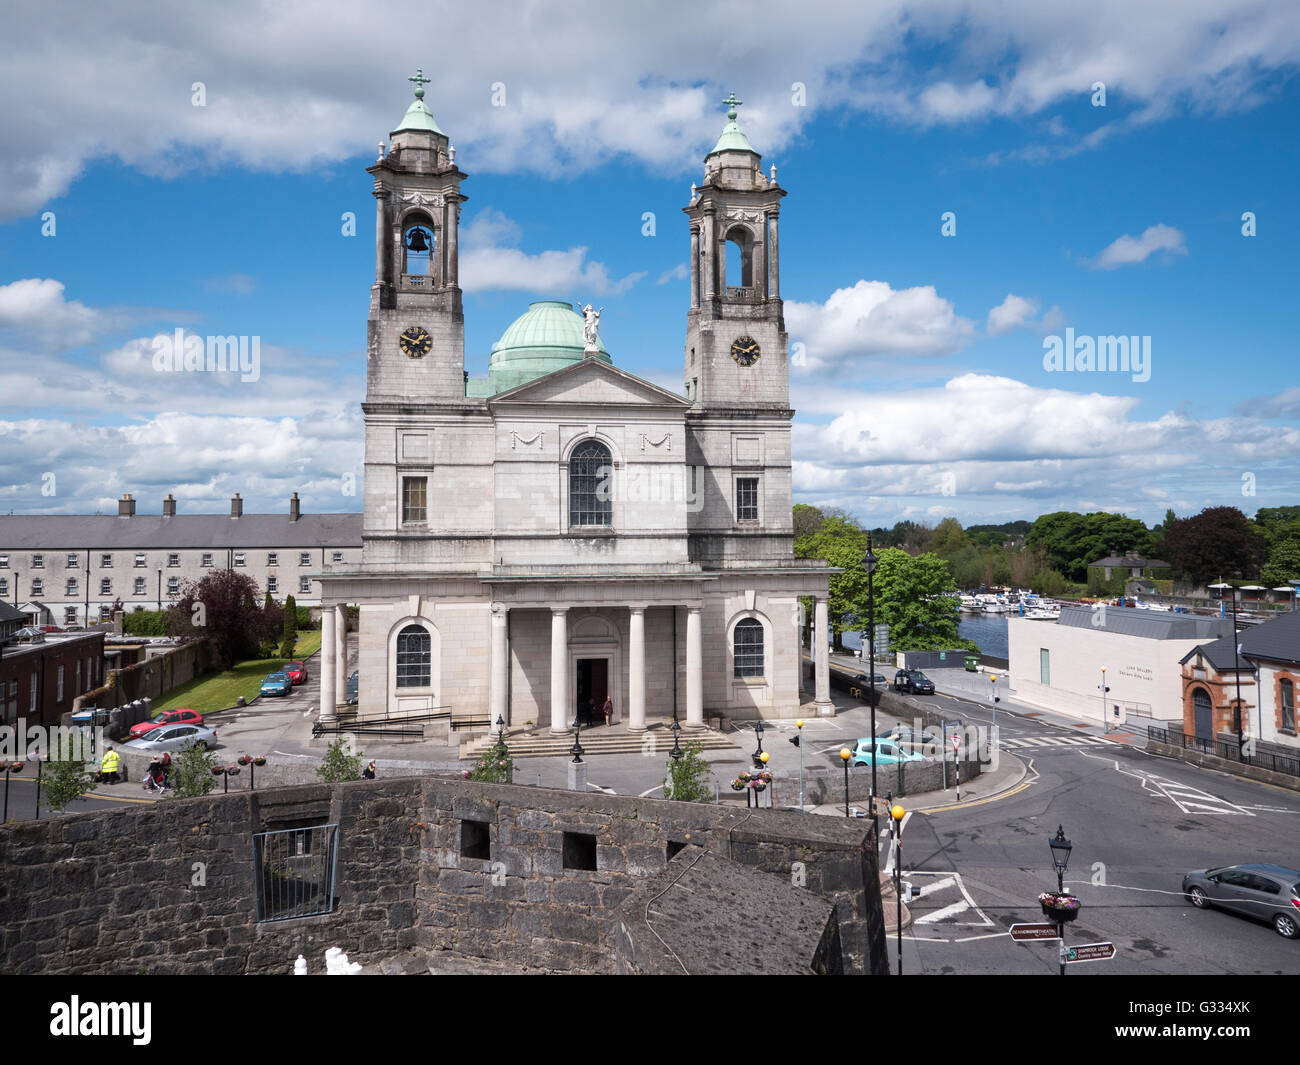 The Church of Saints Peter and Paul, Barrack Street, Athlone, County Westmeath, Ireland. Stock Photo